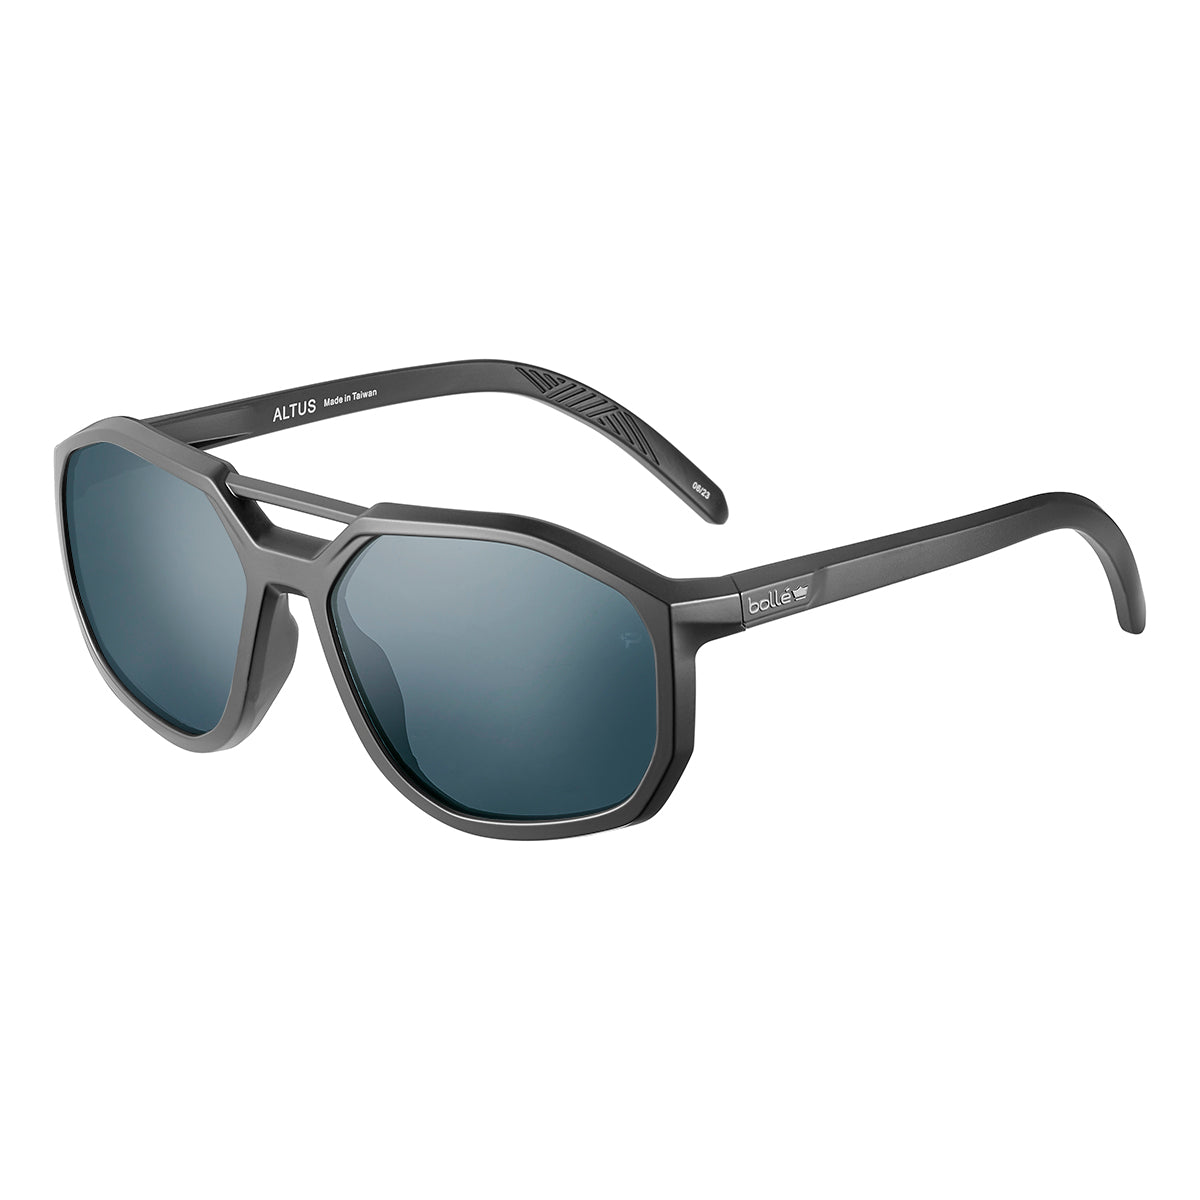 Bolle ALTUS Smoke lifestyle sunglasses